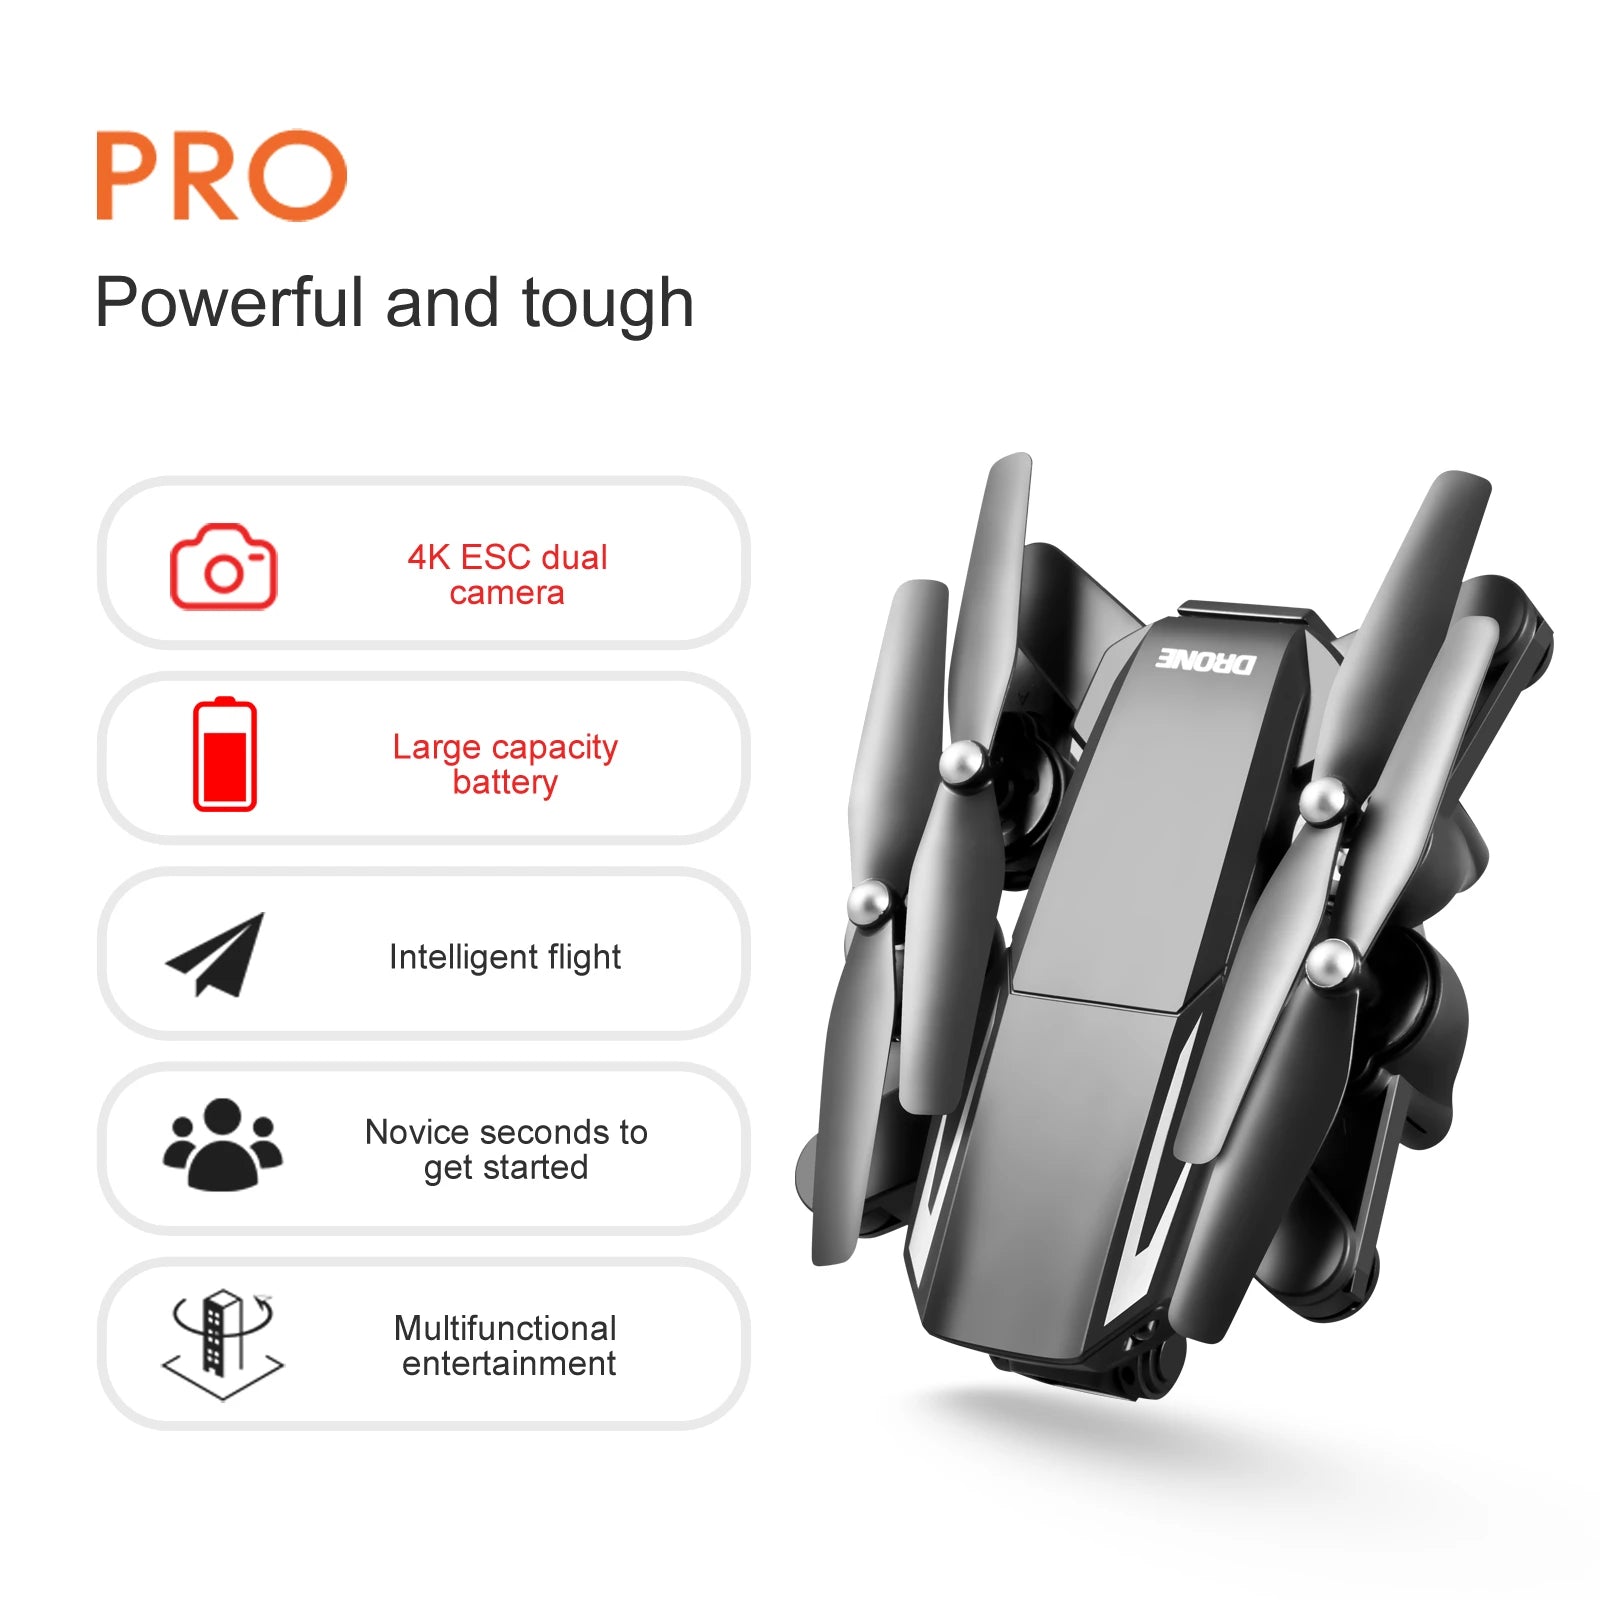 S93 Drone, pro powerful and tough 4k esc dual camera ivob